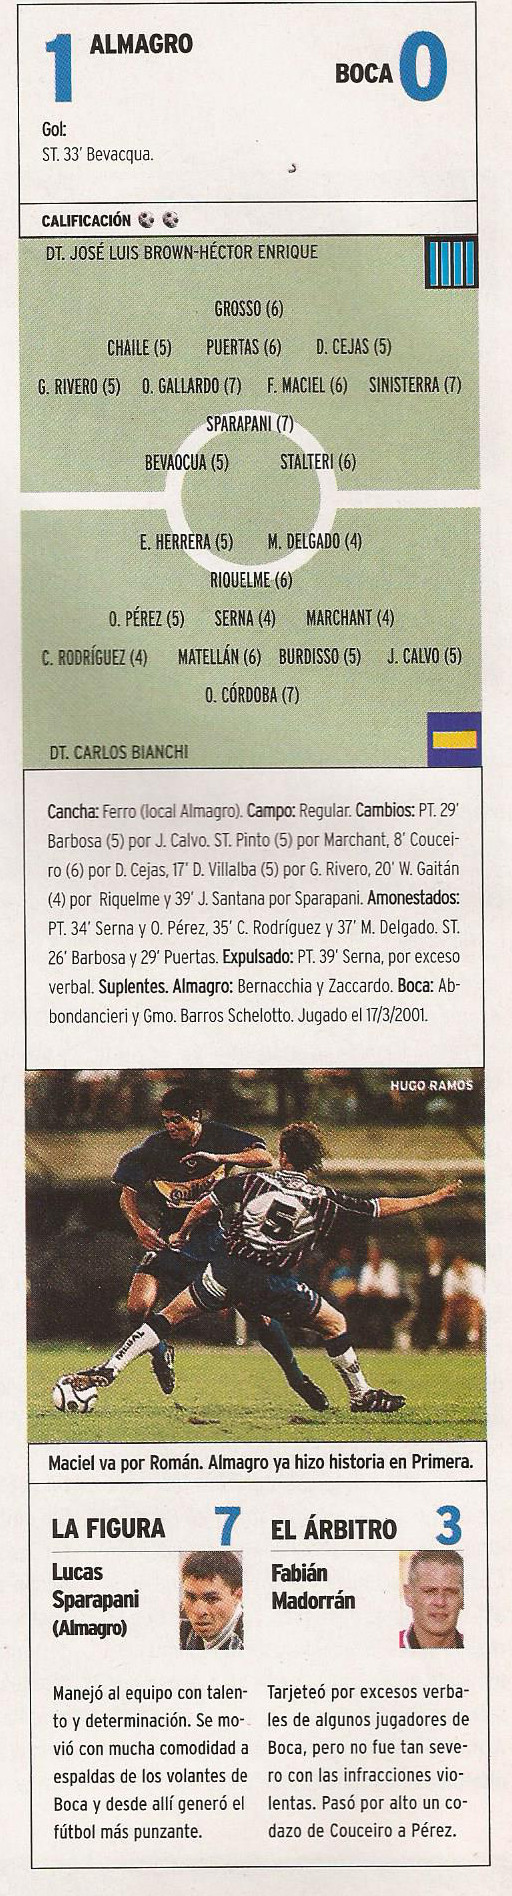 2000-01 Primera Division - Almagro vs Boca Jrs - ficha - El Grafico